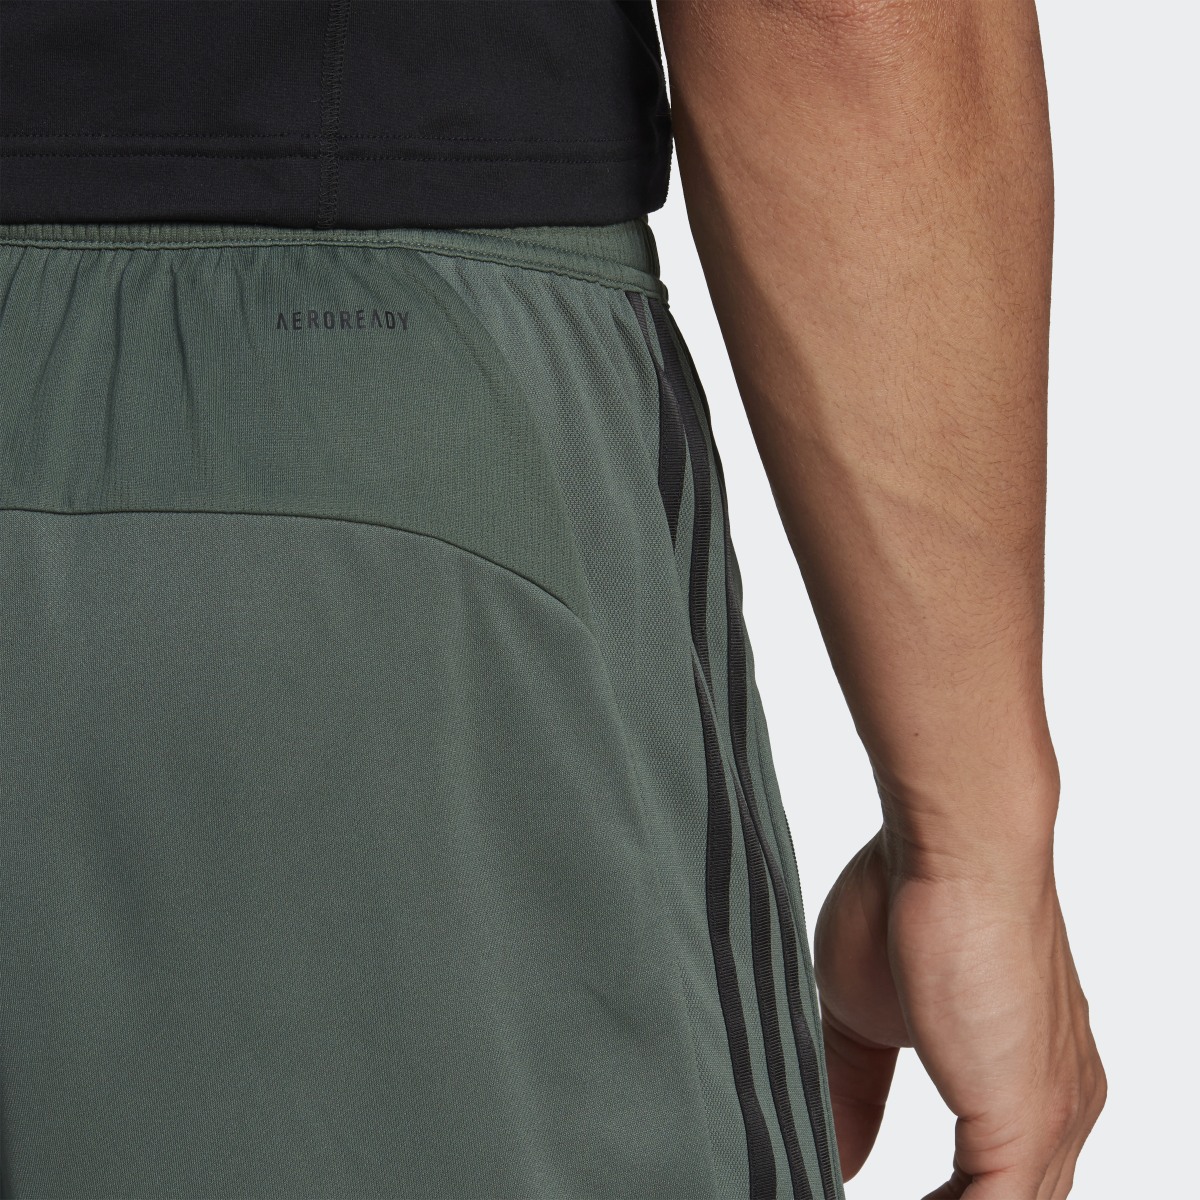 Adidas Primeblue Designed to Move Sport 3-Stripes Shorts. 6